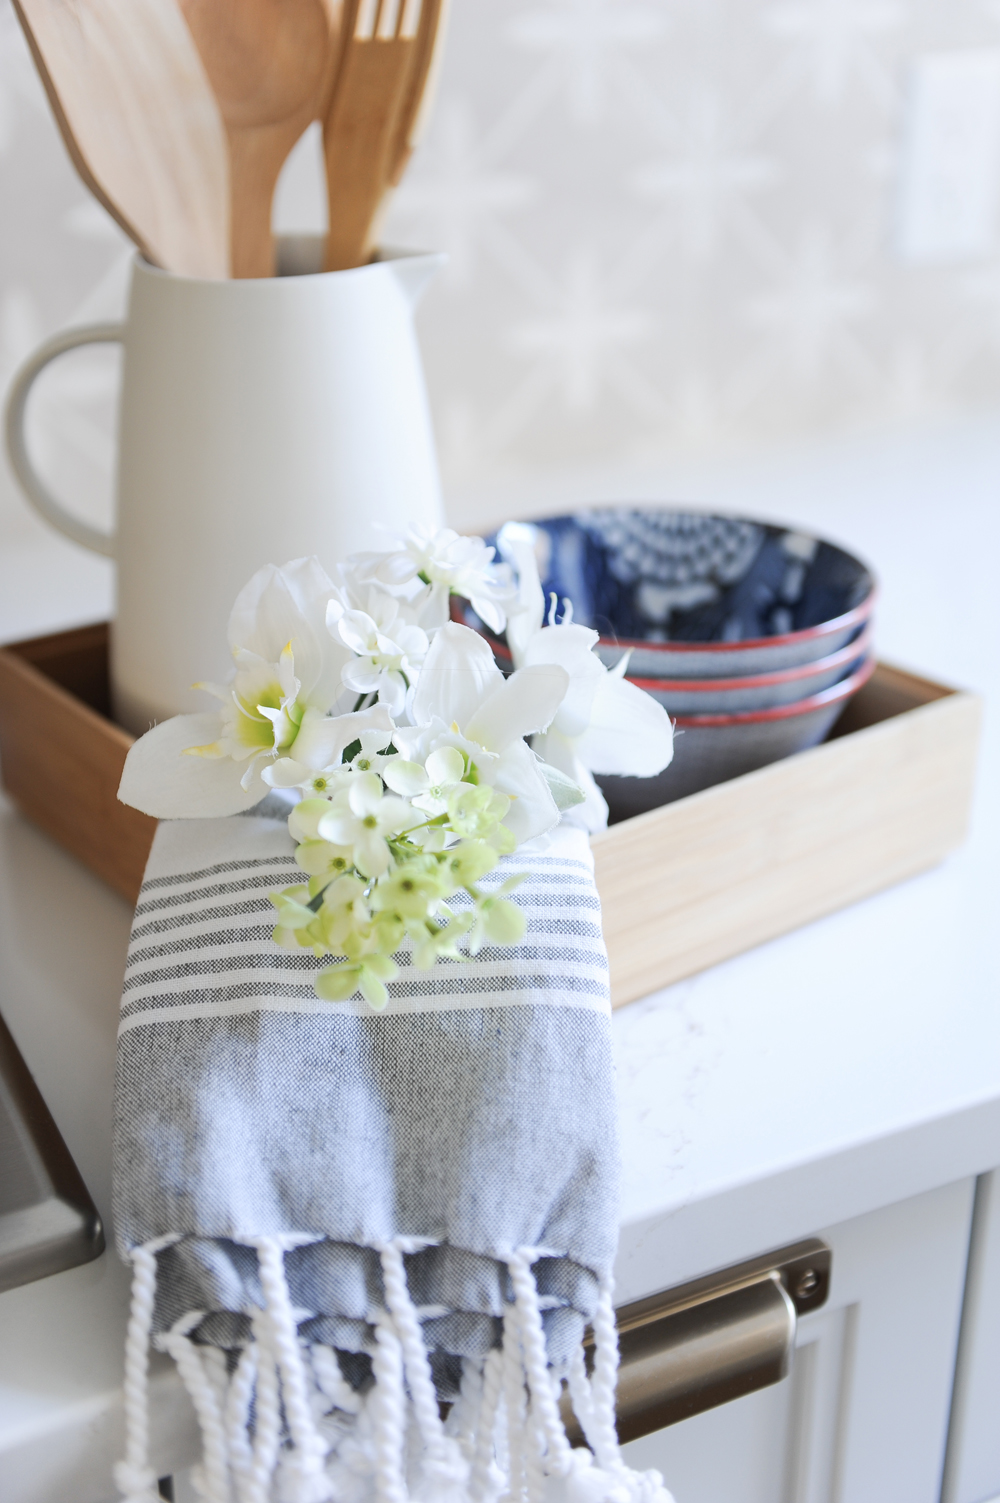 flowers, tea towel, three bowls and white jug